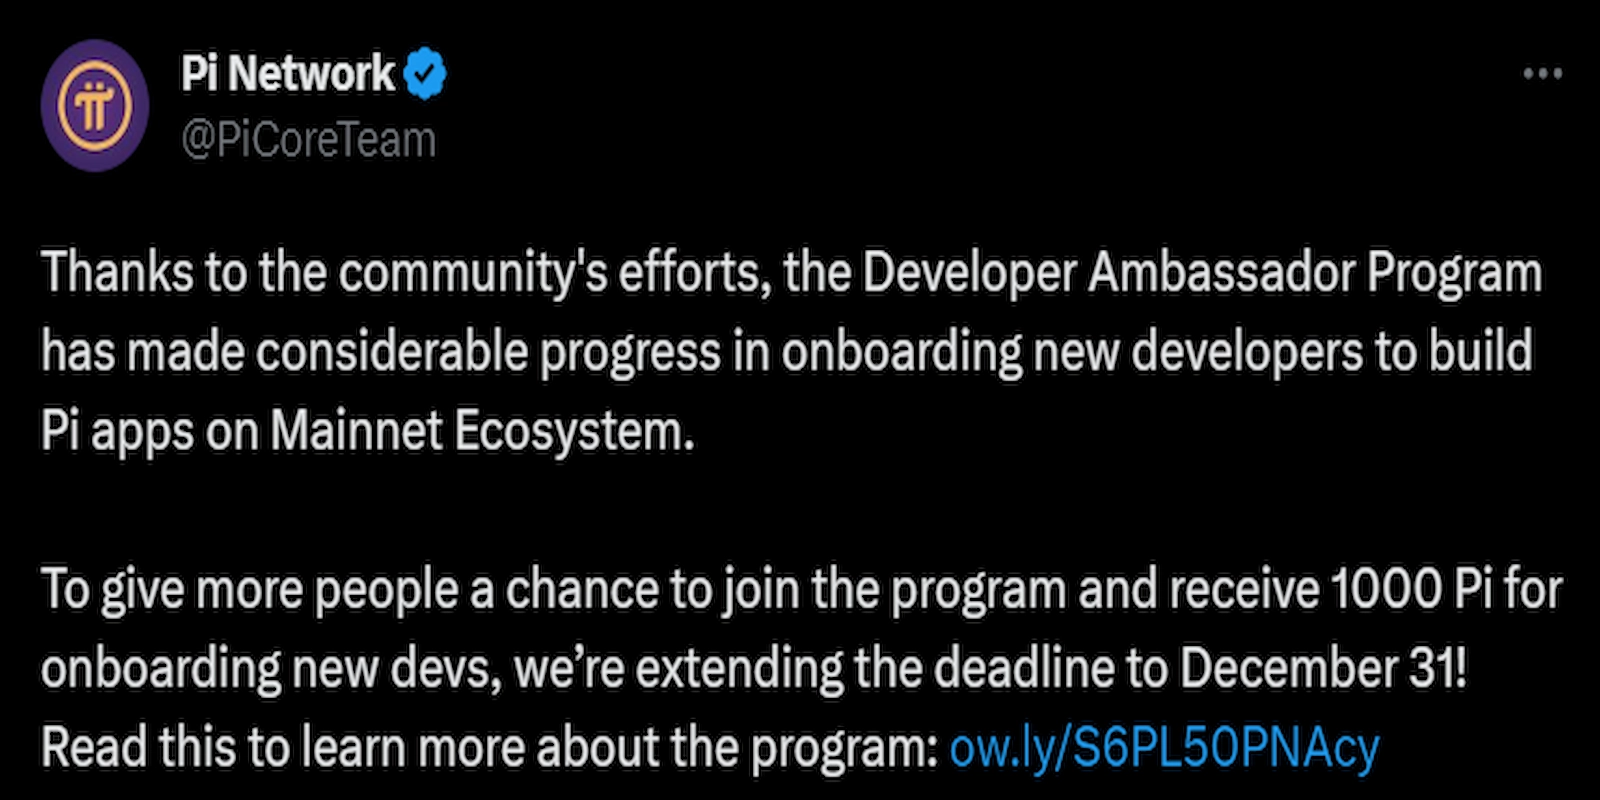 Pi Network extend the deadline for its developer ambassador program